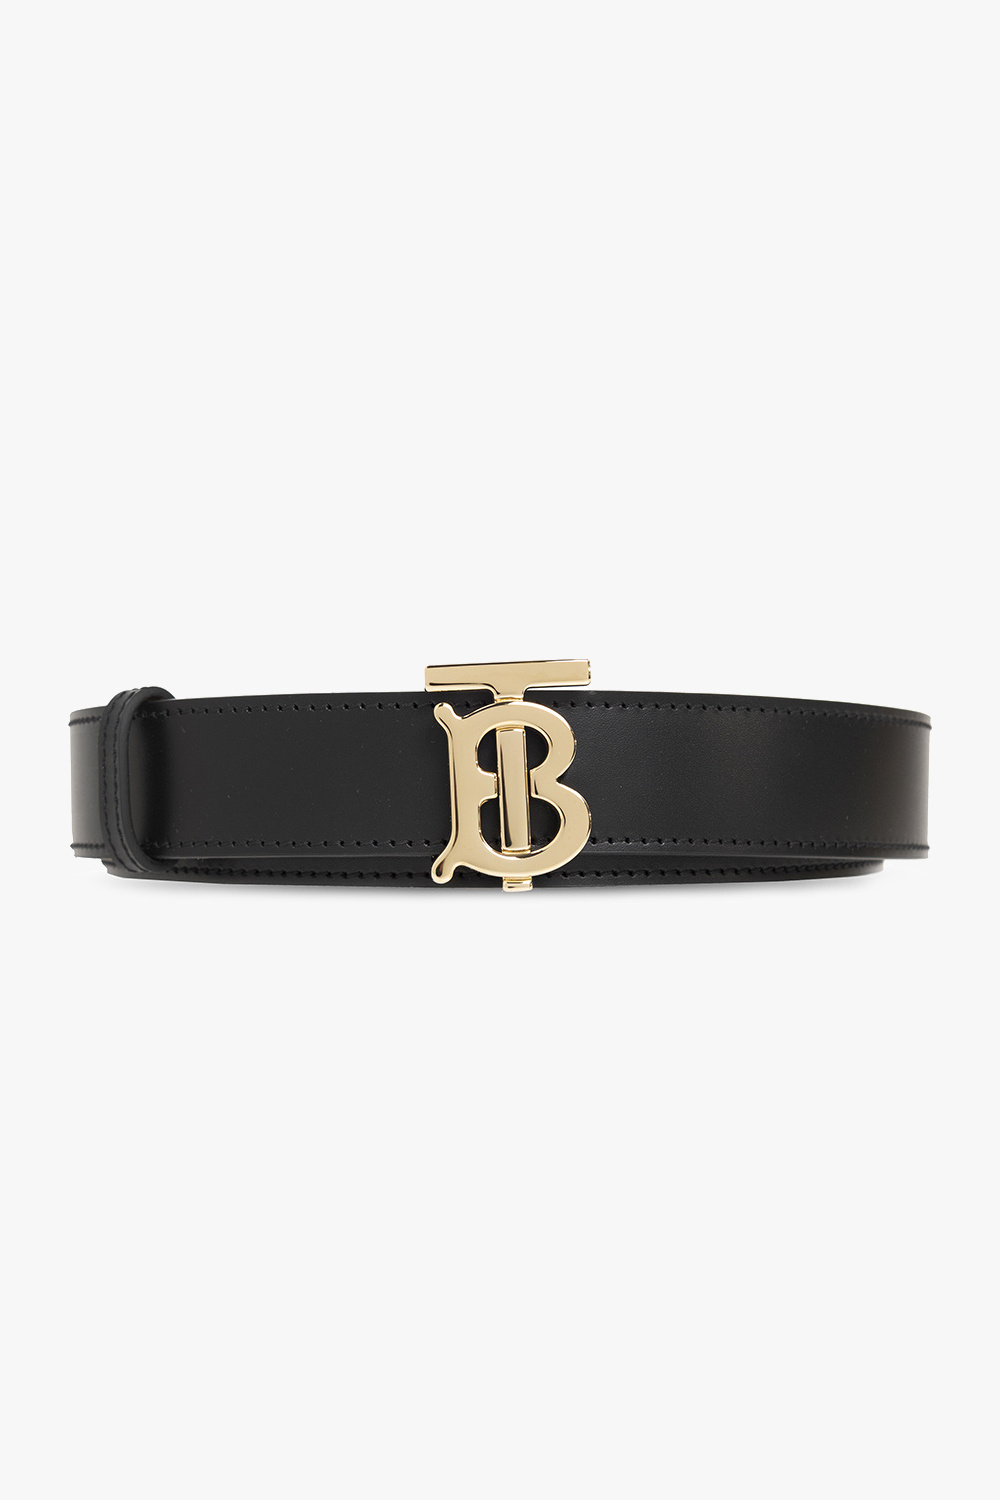 Burberry Reversible leather belt, Women's Accessories